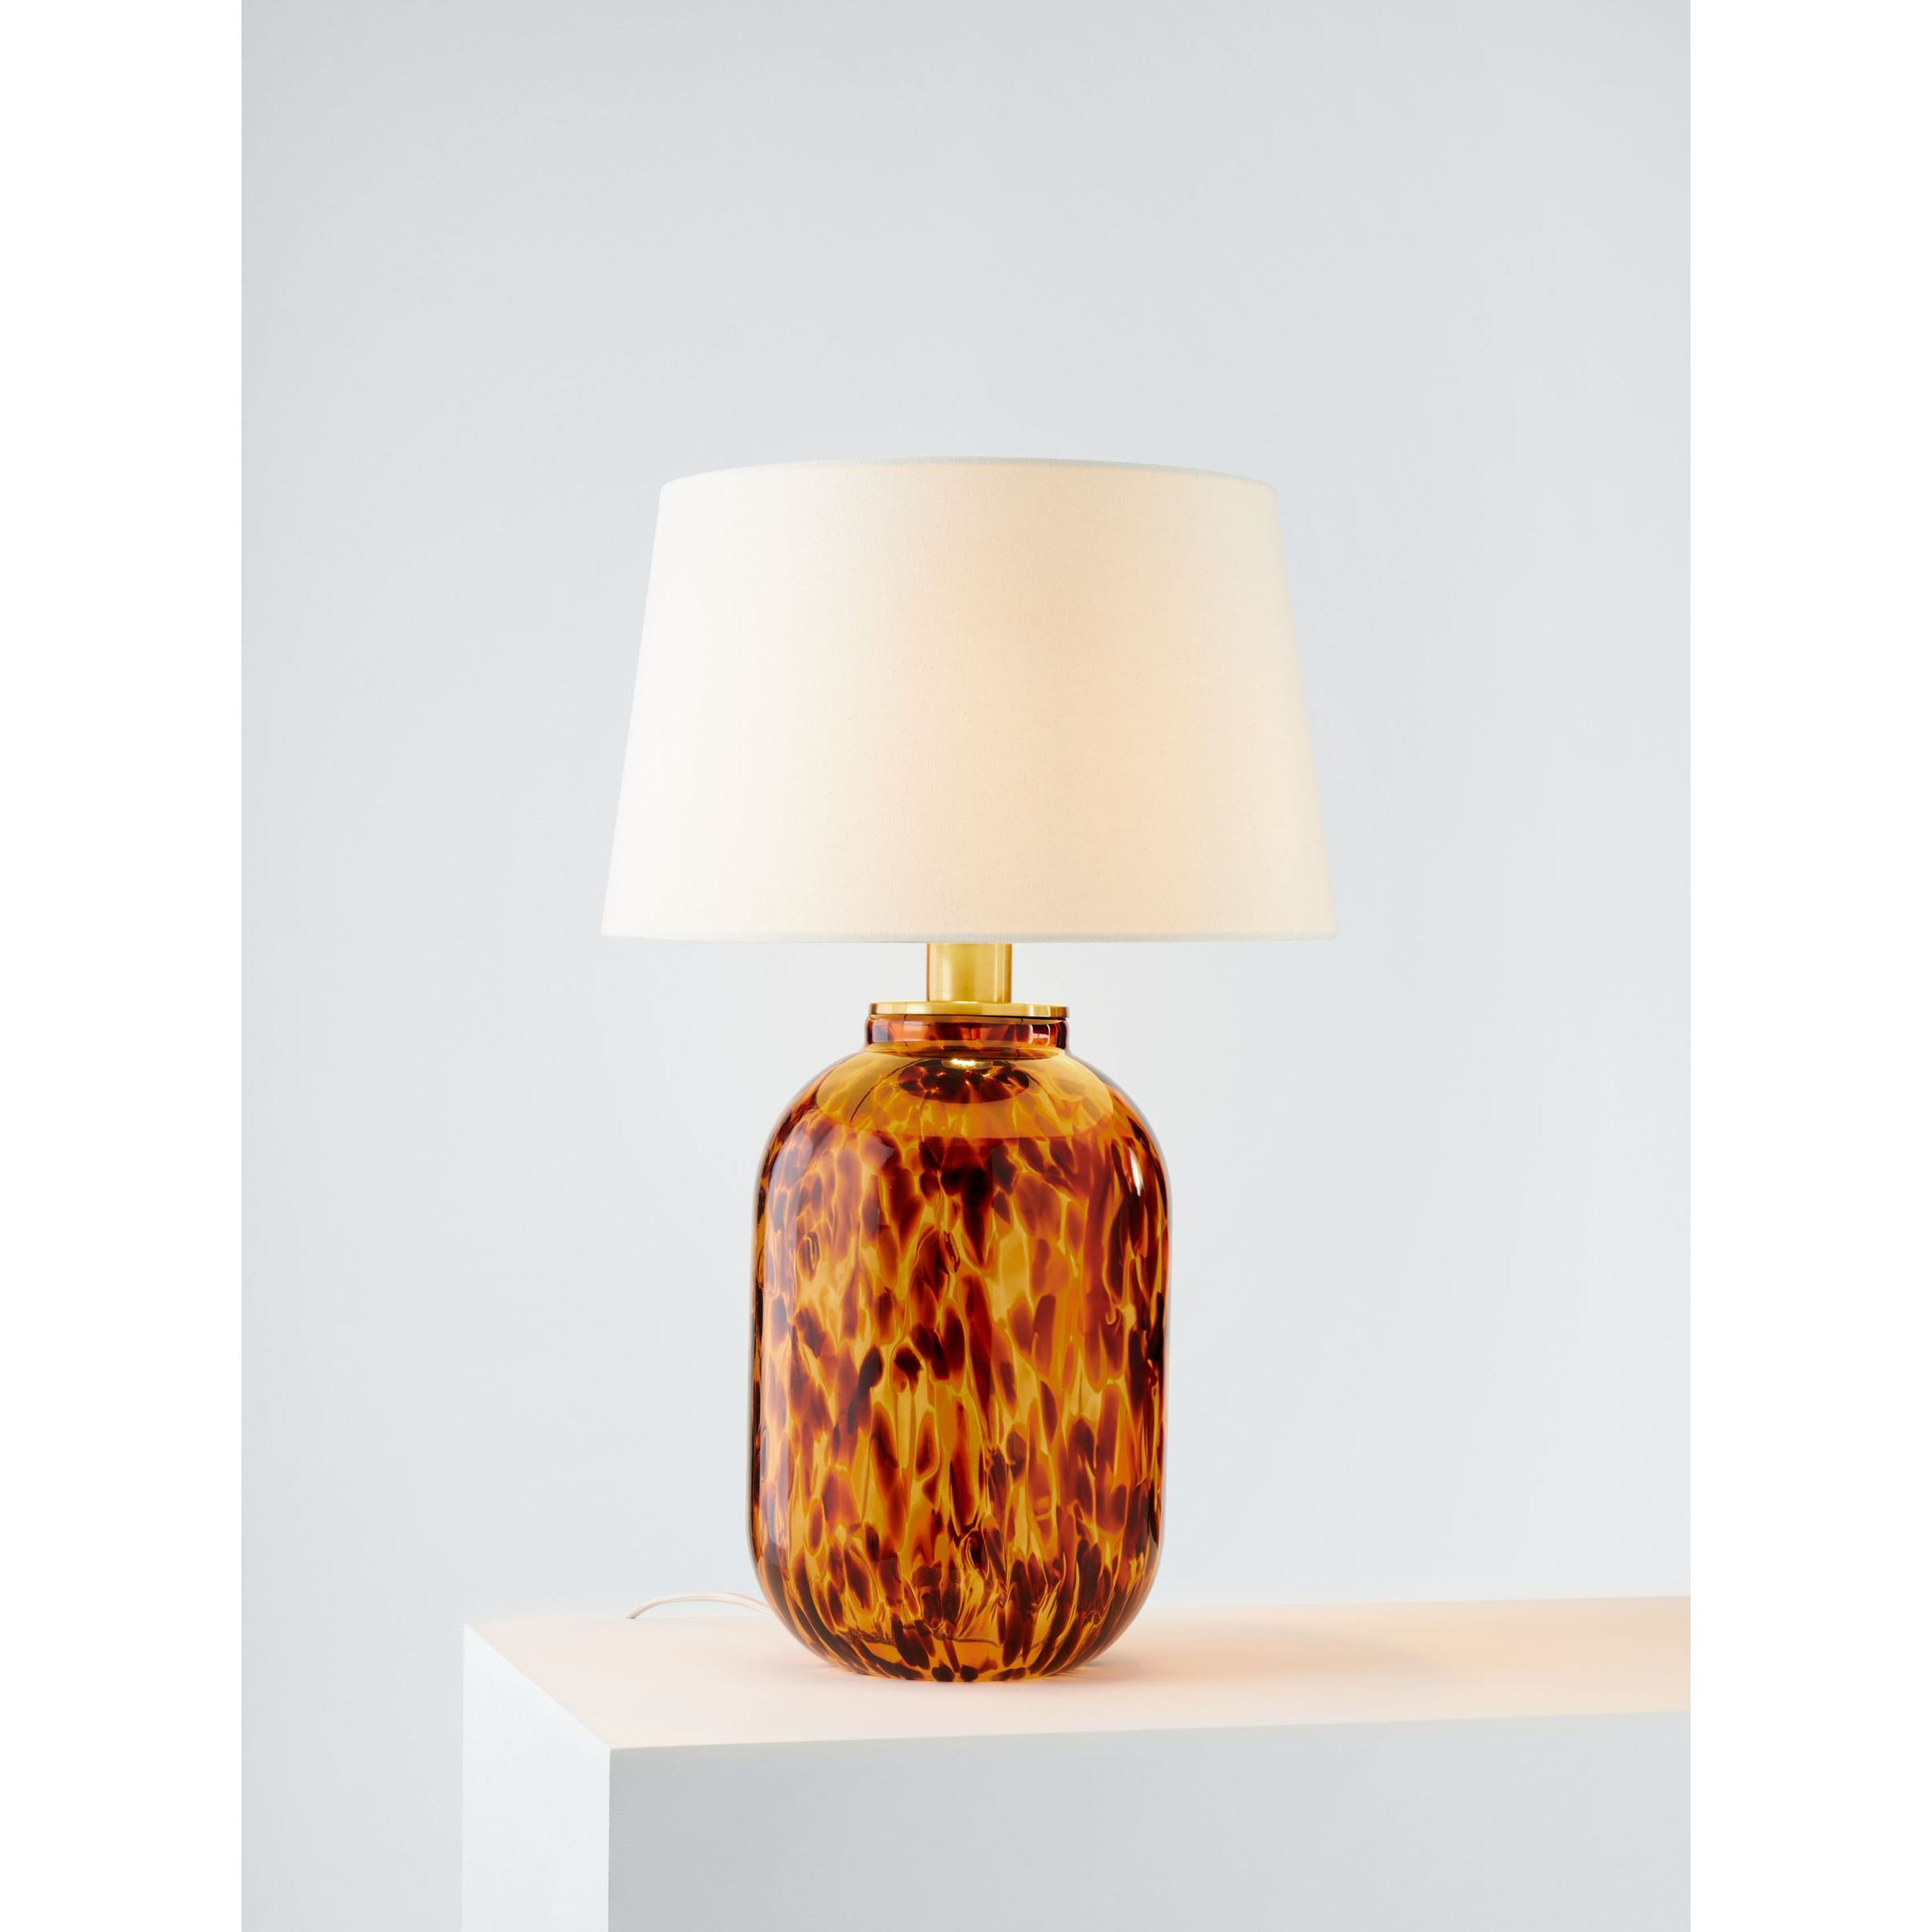 John Lewis Tortoiseshell Glass Table Lamp, Brown - image 1